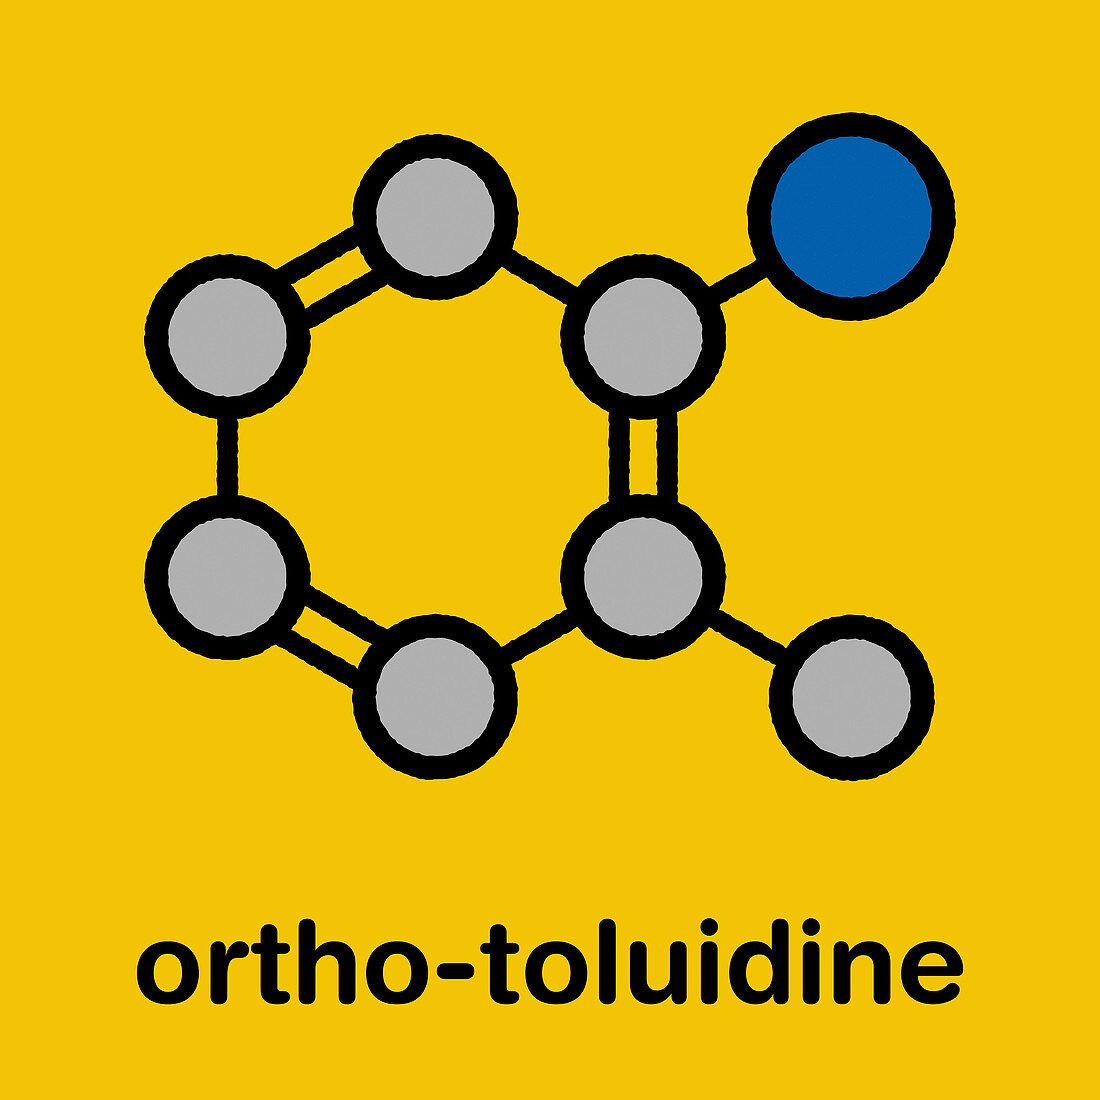 Ortho-toluidine molecule